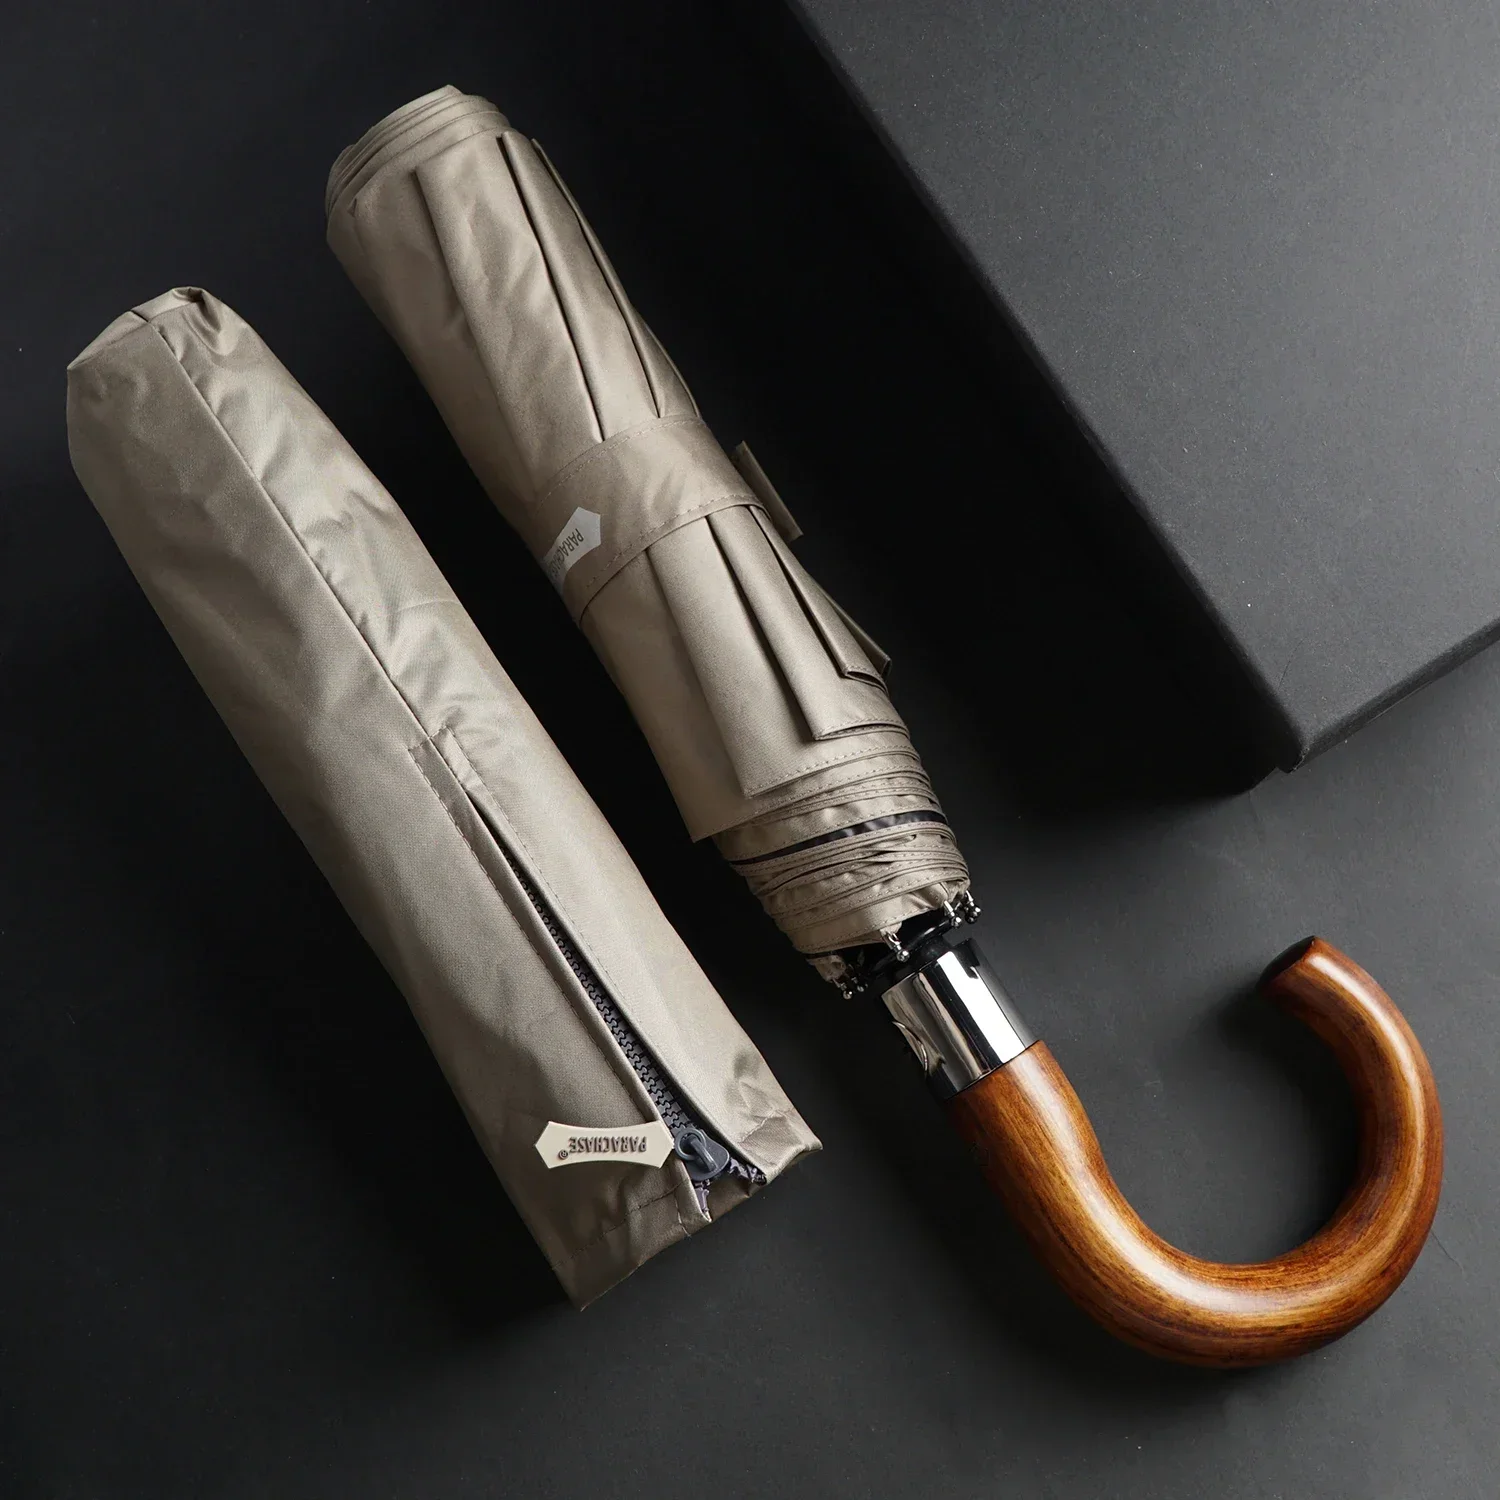 Wooden Umbrella for Men, Parachase Large Automatic Folding Umbrella Rain, Luxury Big Umbrellas Windproof Strong, Free Shipping